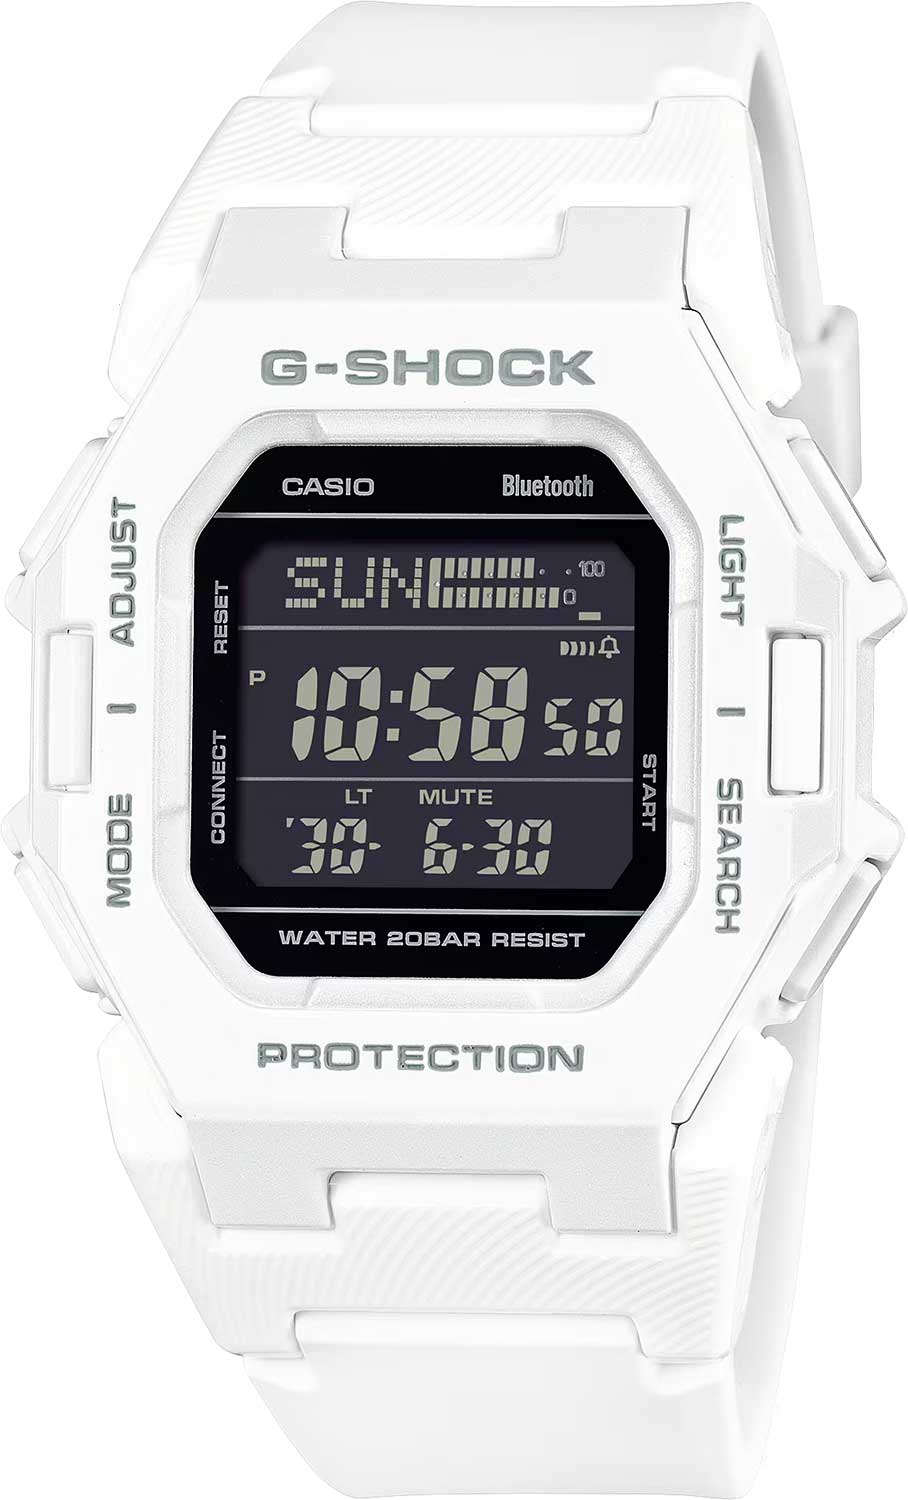     Casio G-SHOCK GD-B500-7  